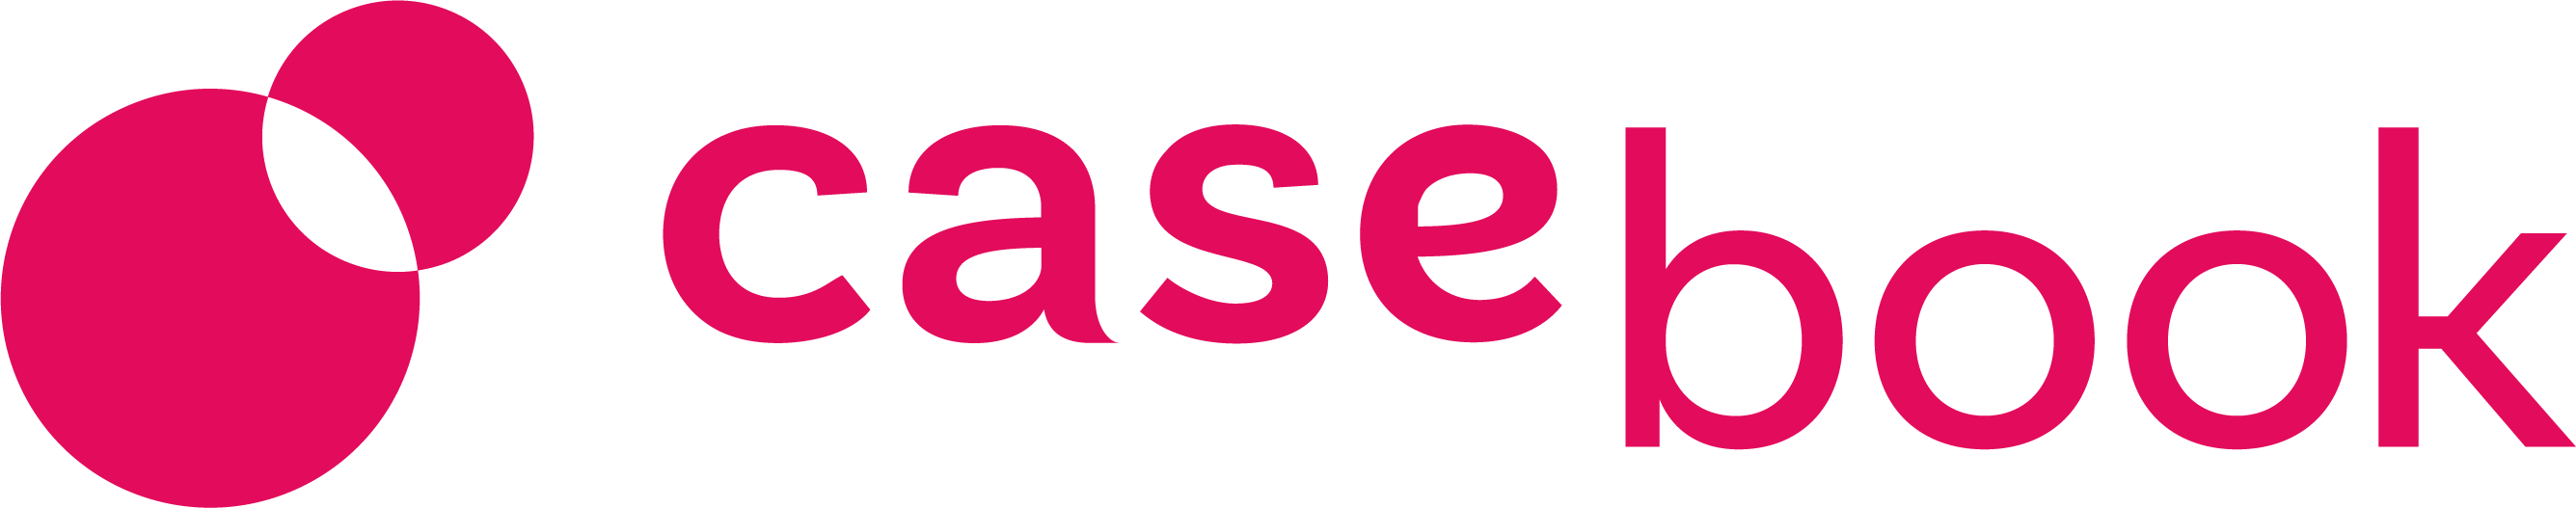 casebook-logo